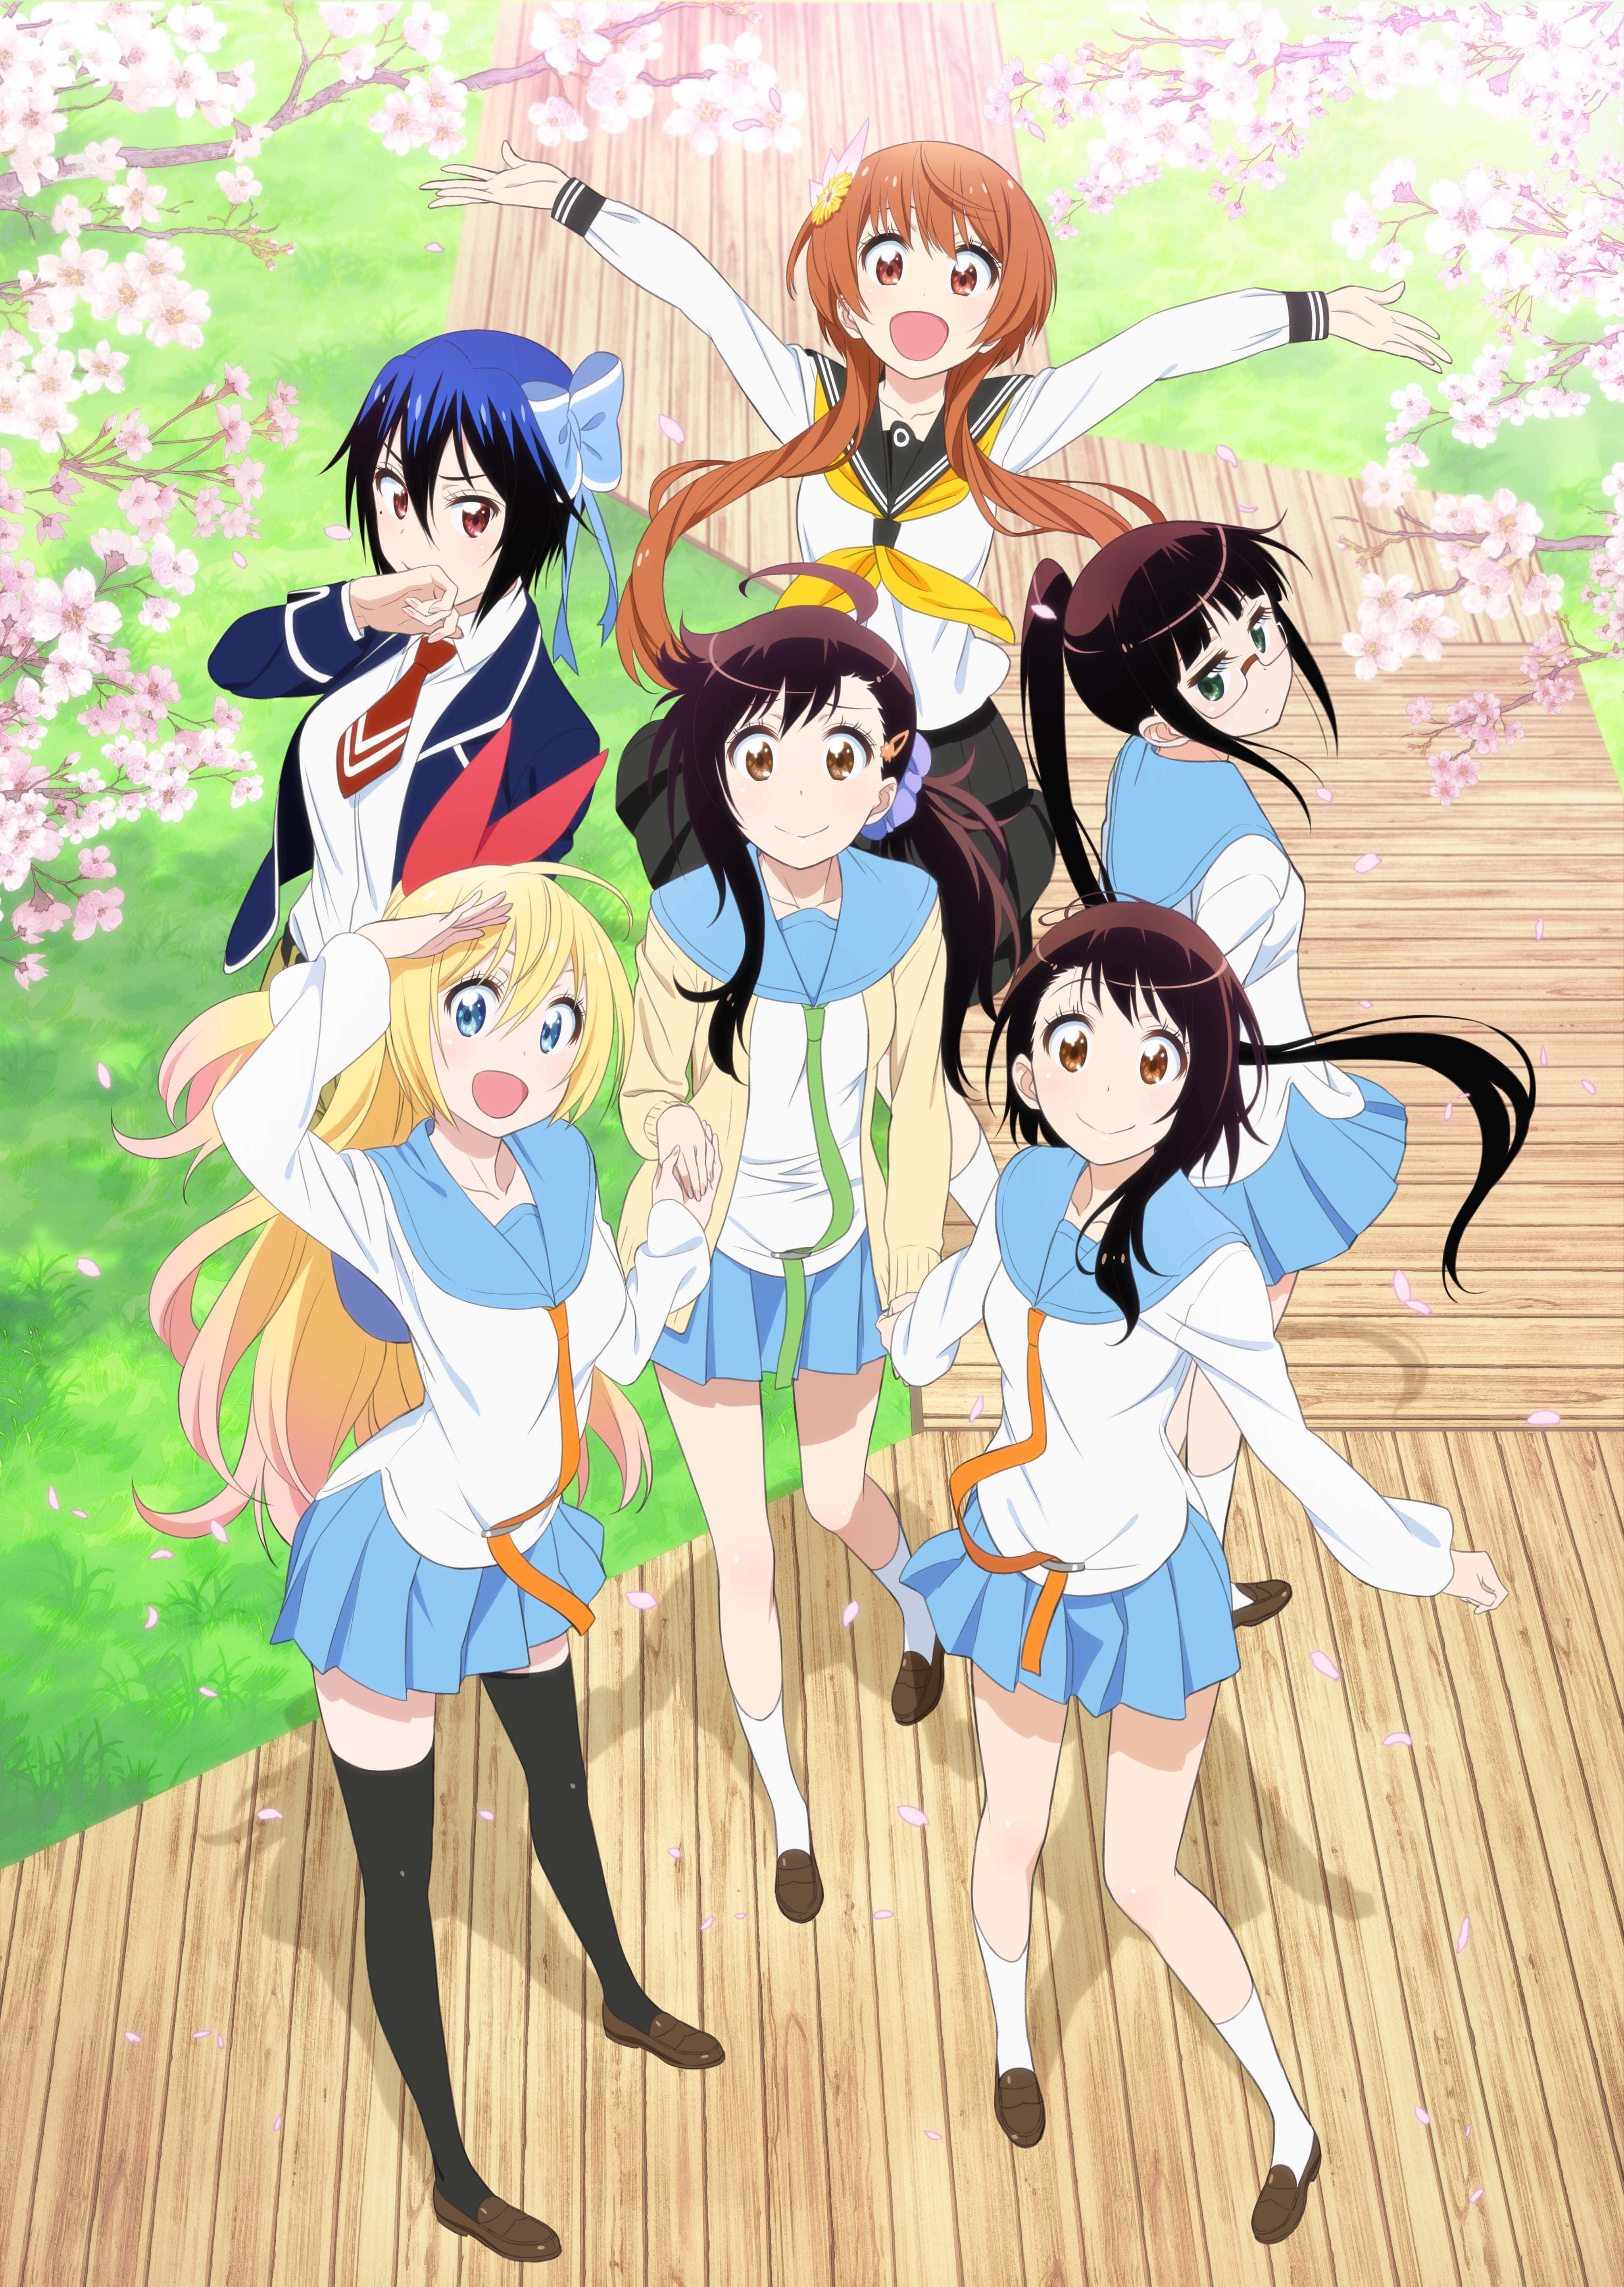 nisekoi-staffel-2-anime-ger-sub-stream-anime-serien